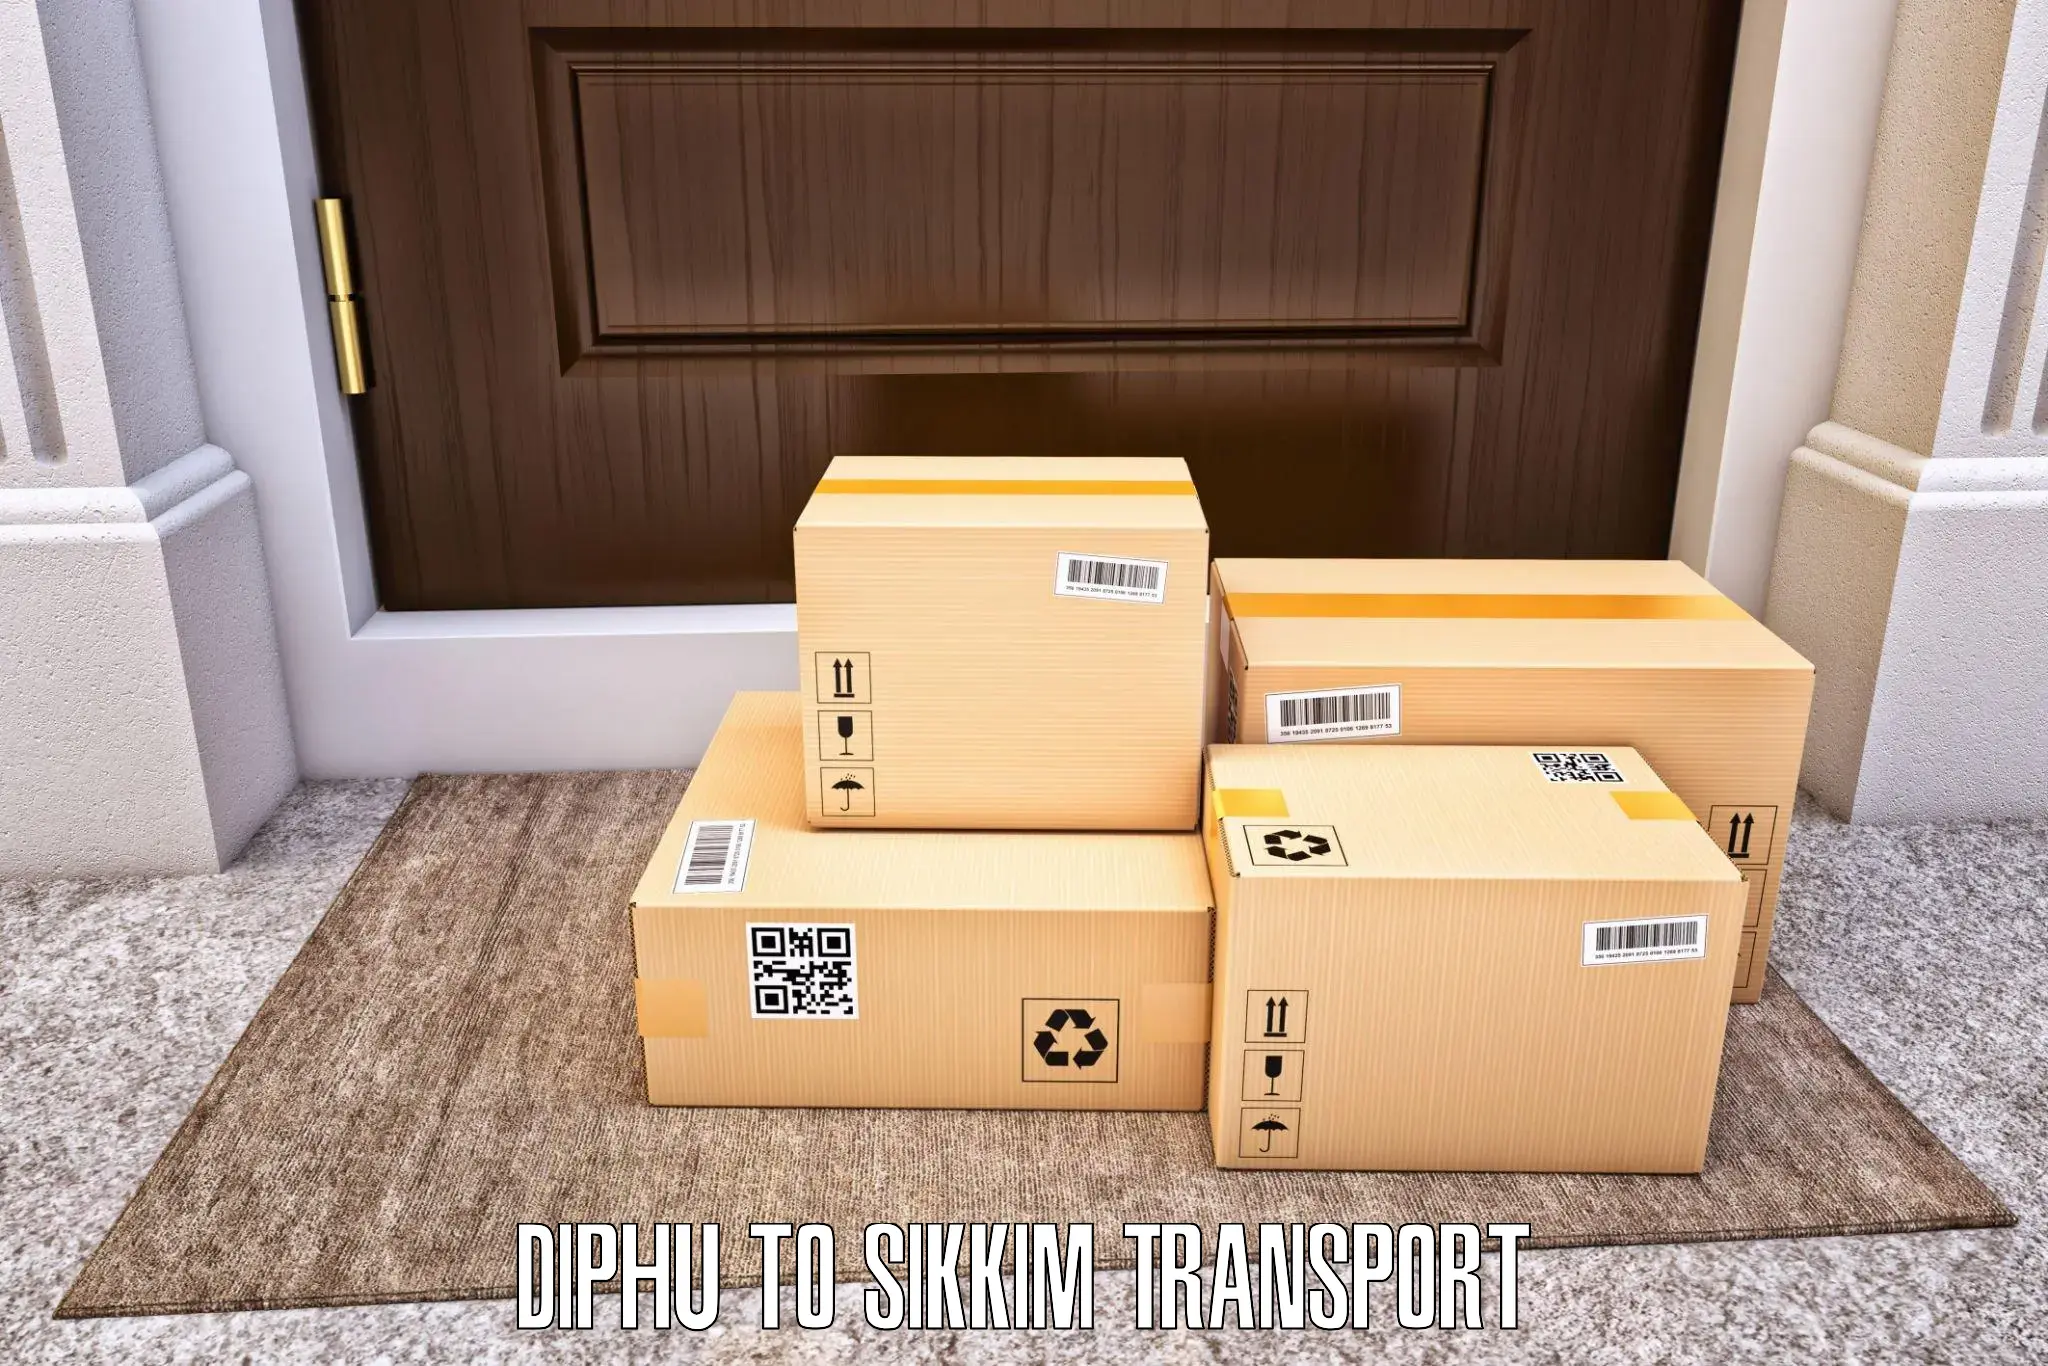 Furniture transport service Diphu to East Sikkim